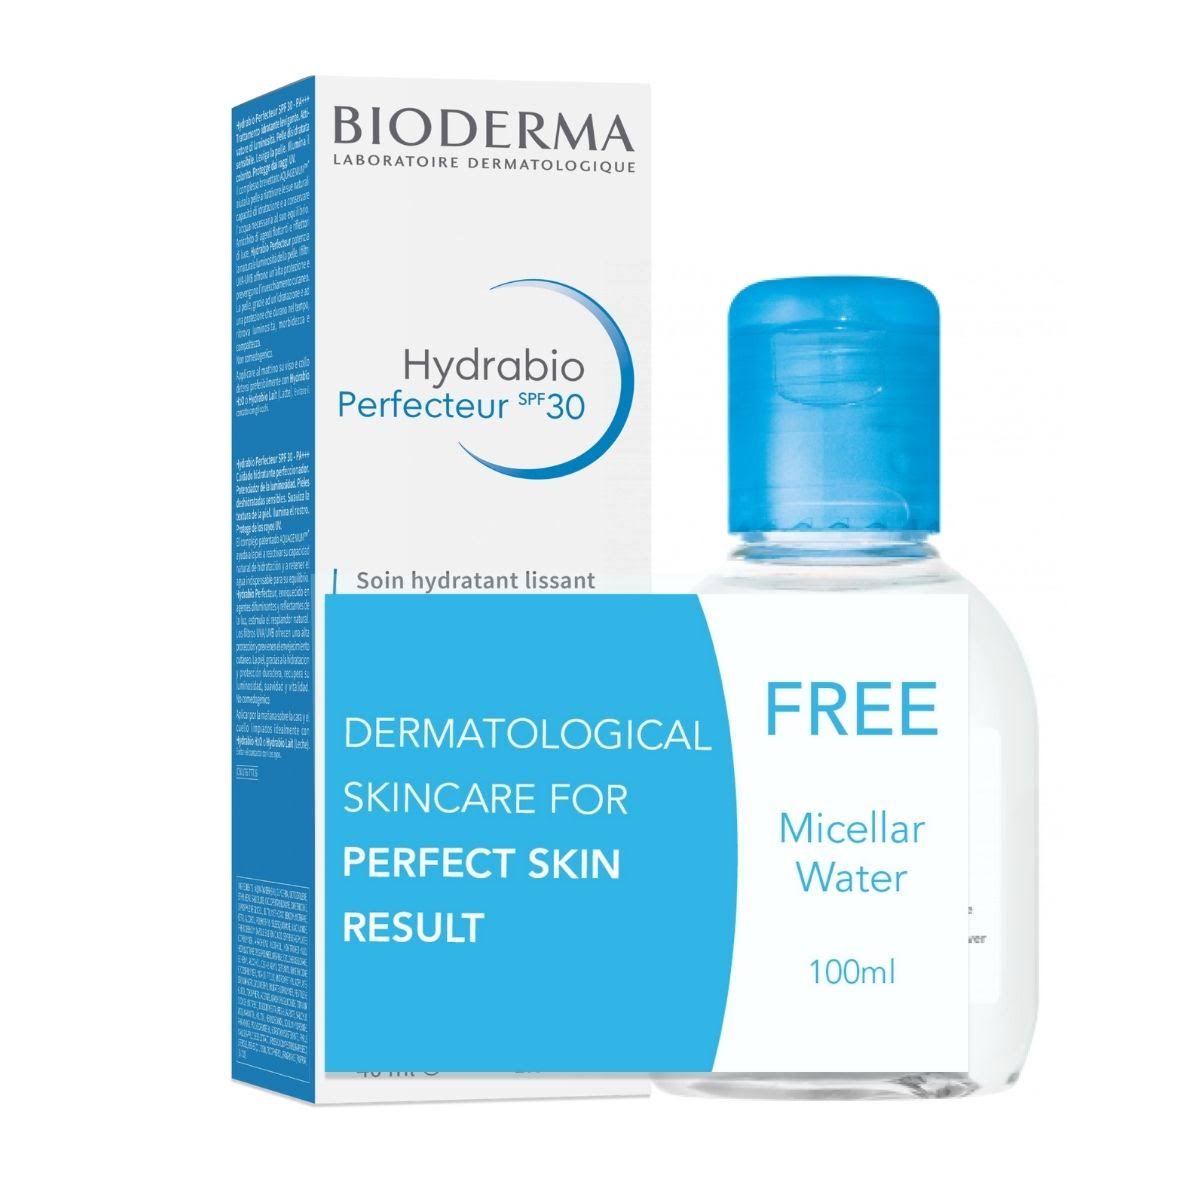 Bioderma - Hydrabio Perfecteur Radiance Booster SPF30 Plus Free Micellar Water.